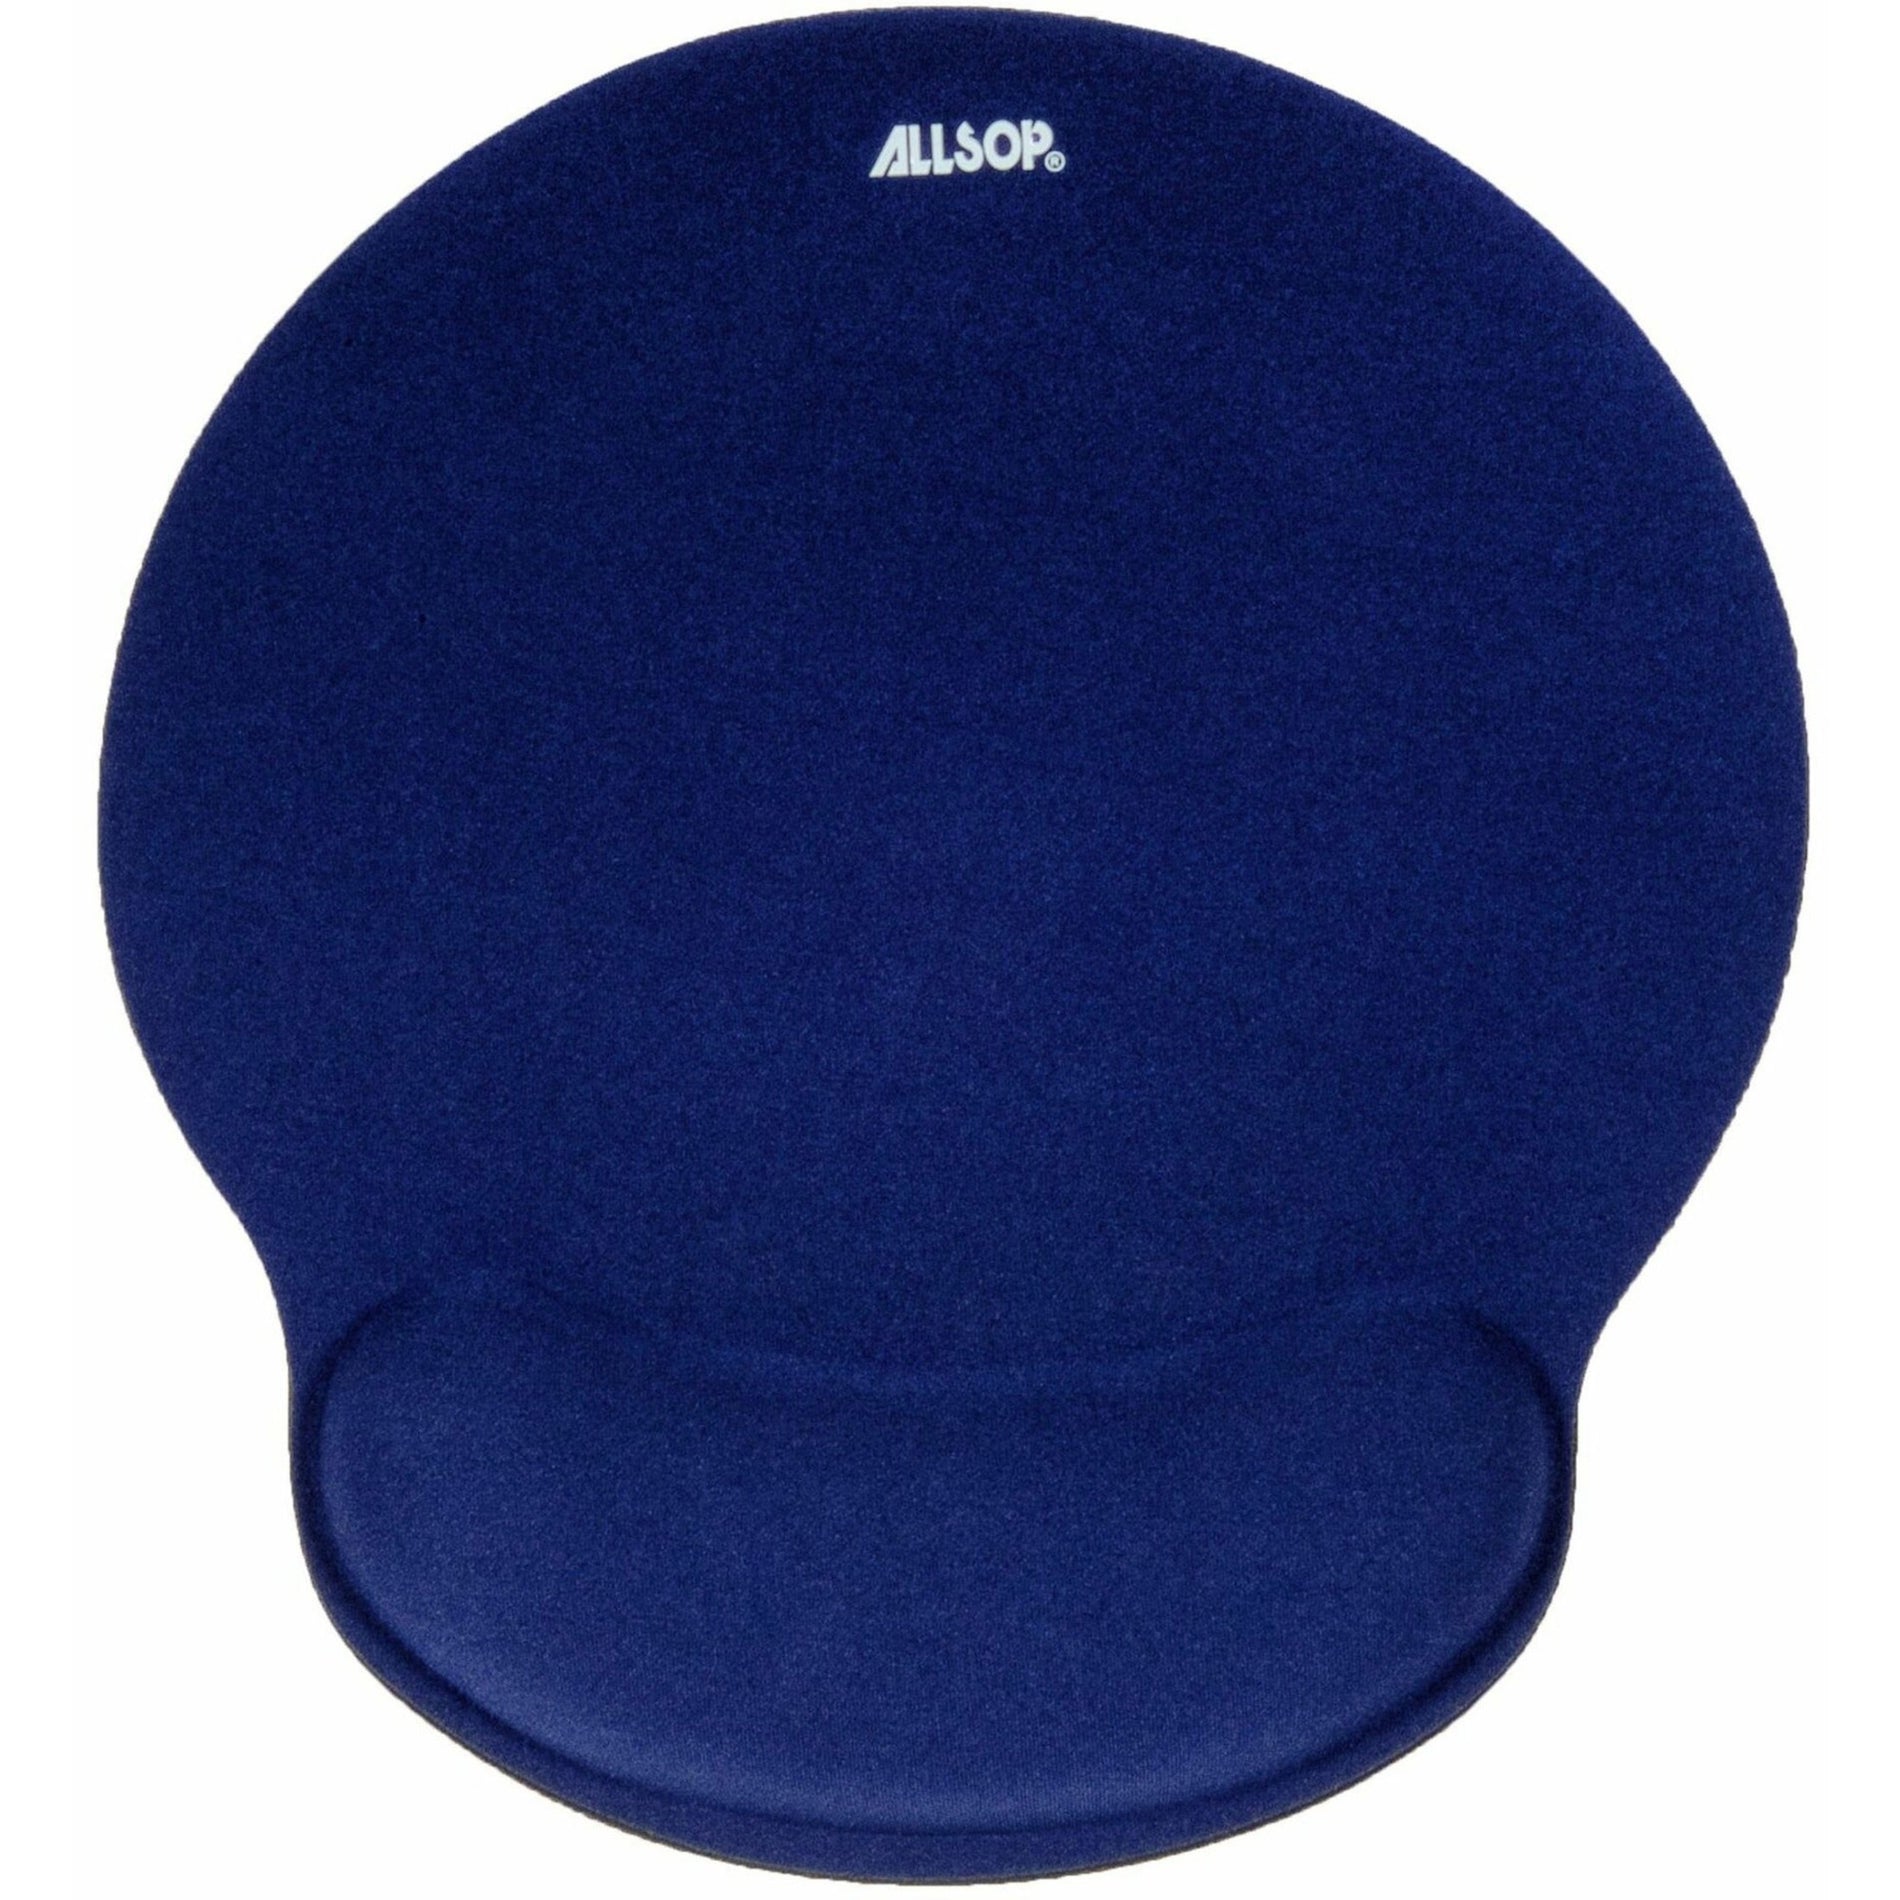 Allsop 30206 ComfortFoam Memory Foam Mouse Pad with Wrist Rest, Non-Skid, Blue